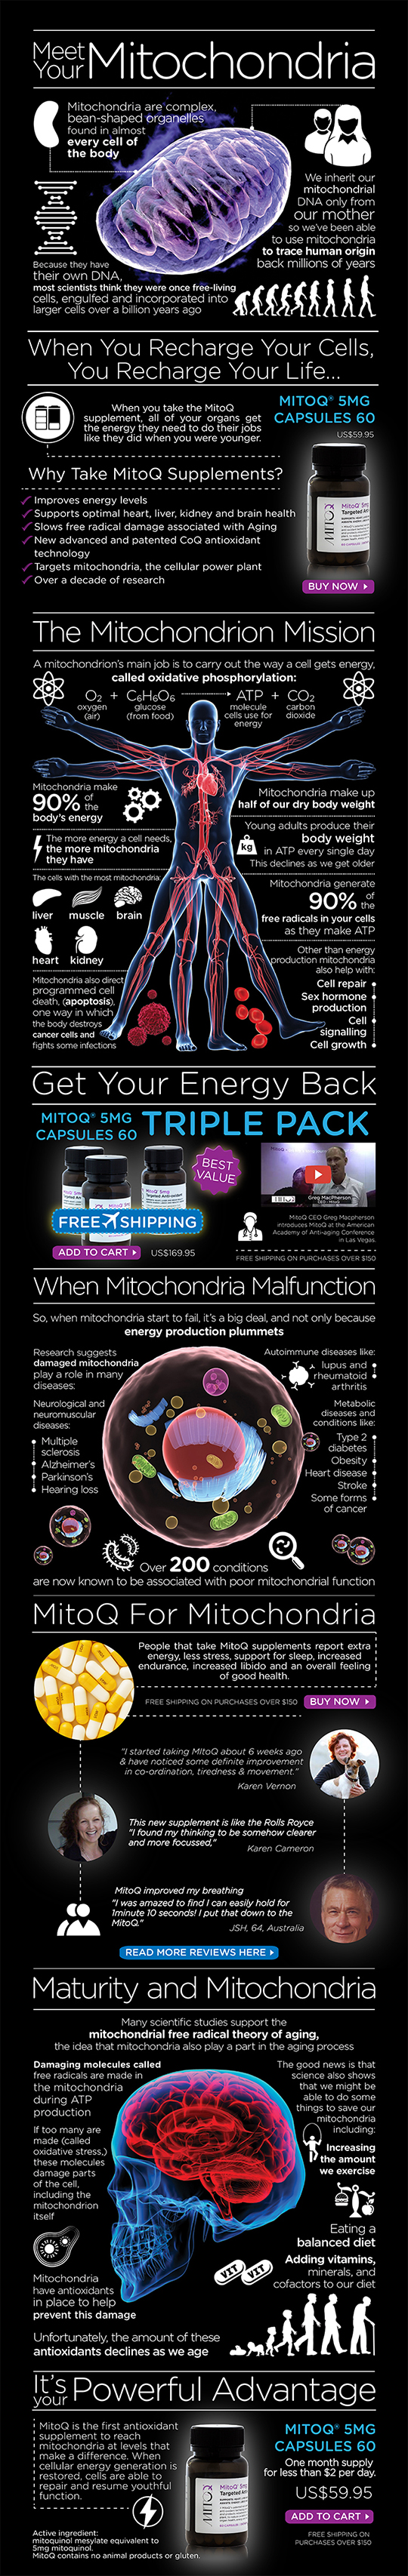 Infographic on Mitochondria